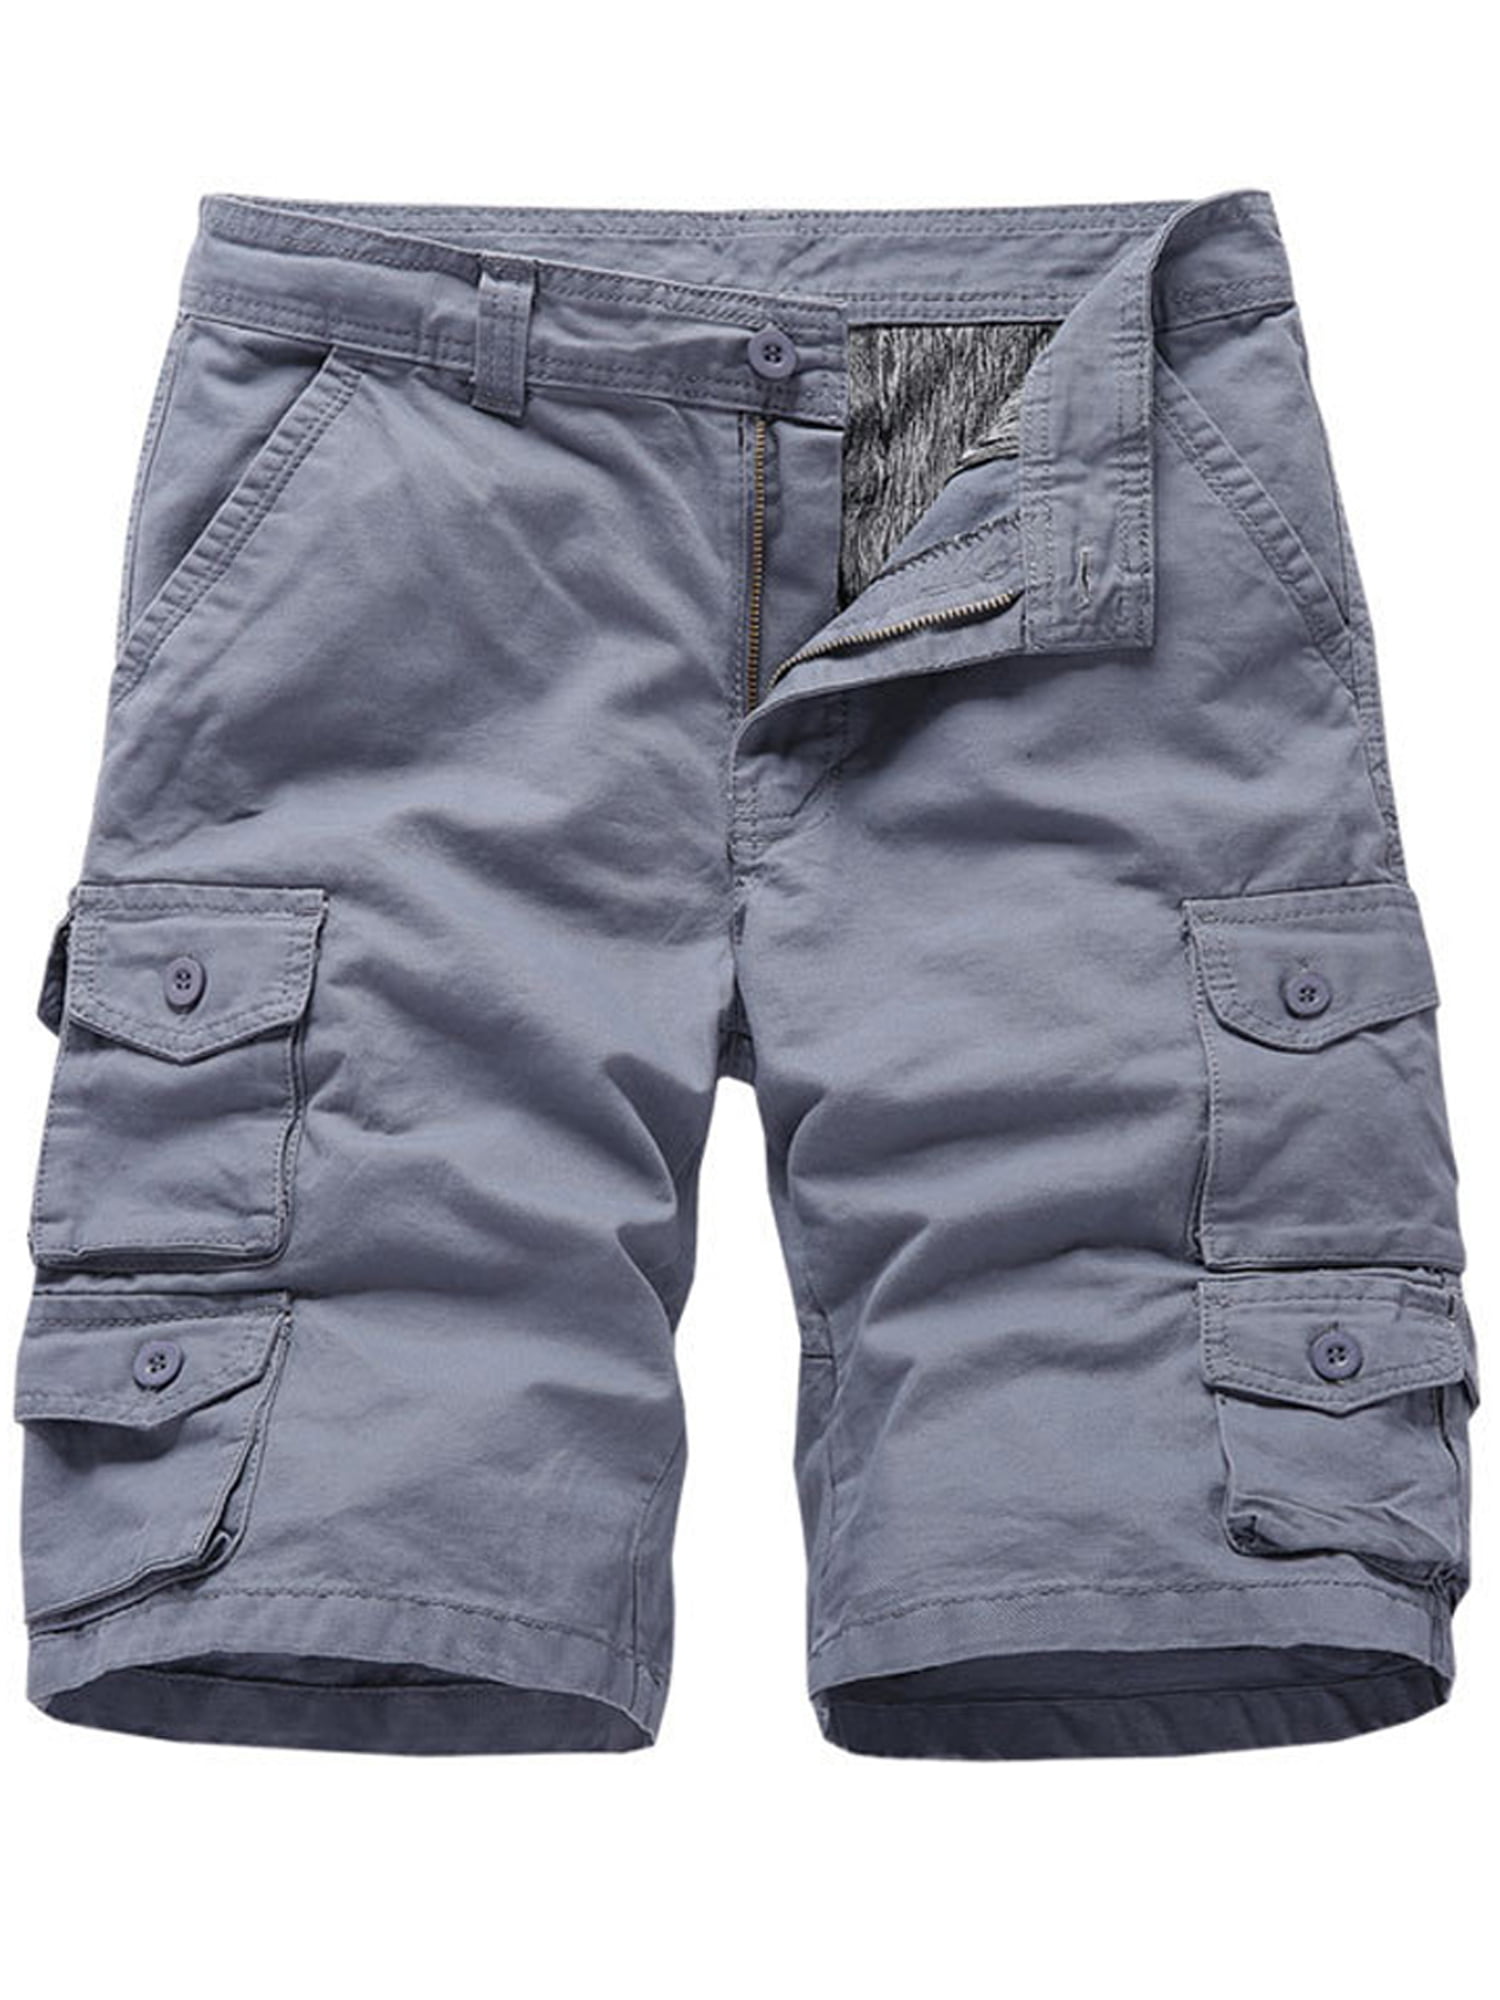 Men Military Combat Camo Cargo Shorts Pants Casual Army Half Trousers Sweatpants 